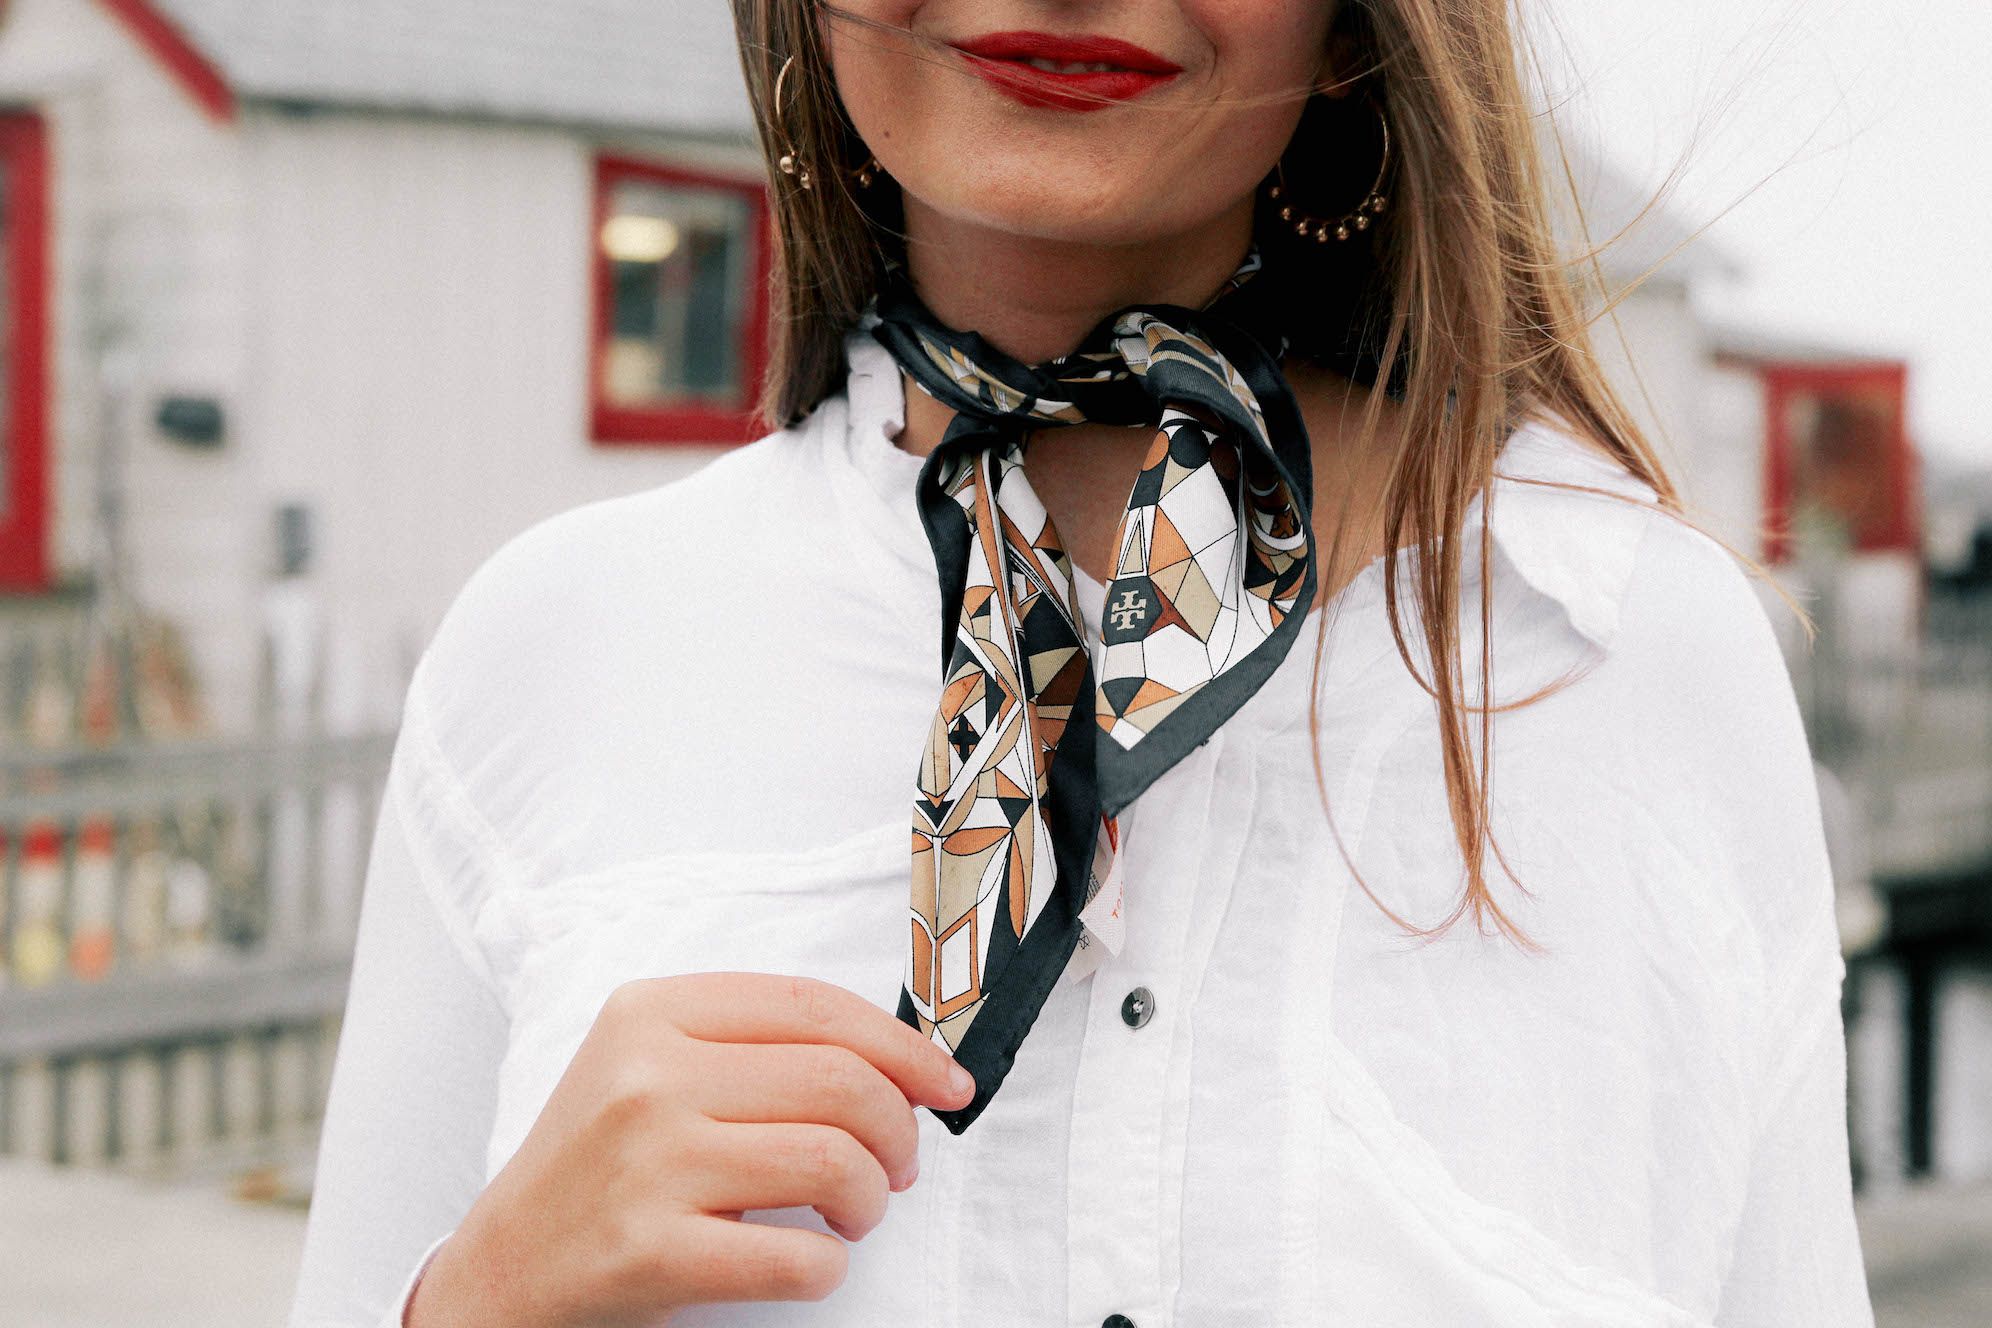 Atar A pie Cambiable Marie Claire | Moda para mayores de 50: las 5 ideas infalibles para usar  pañuelo y sumar estilo